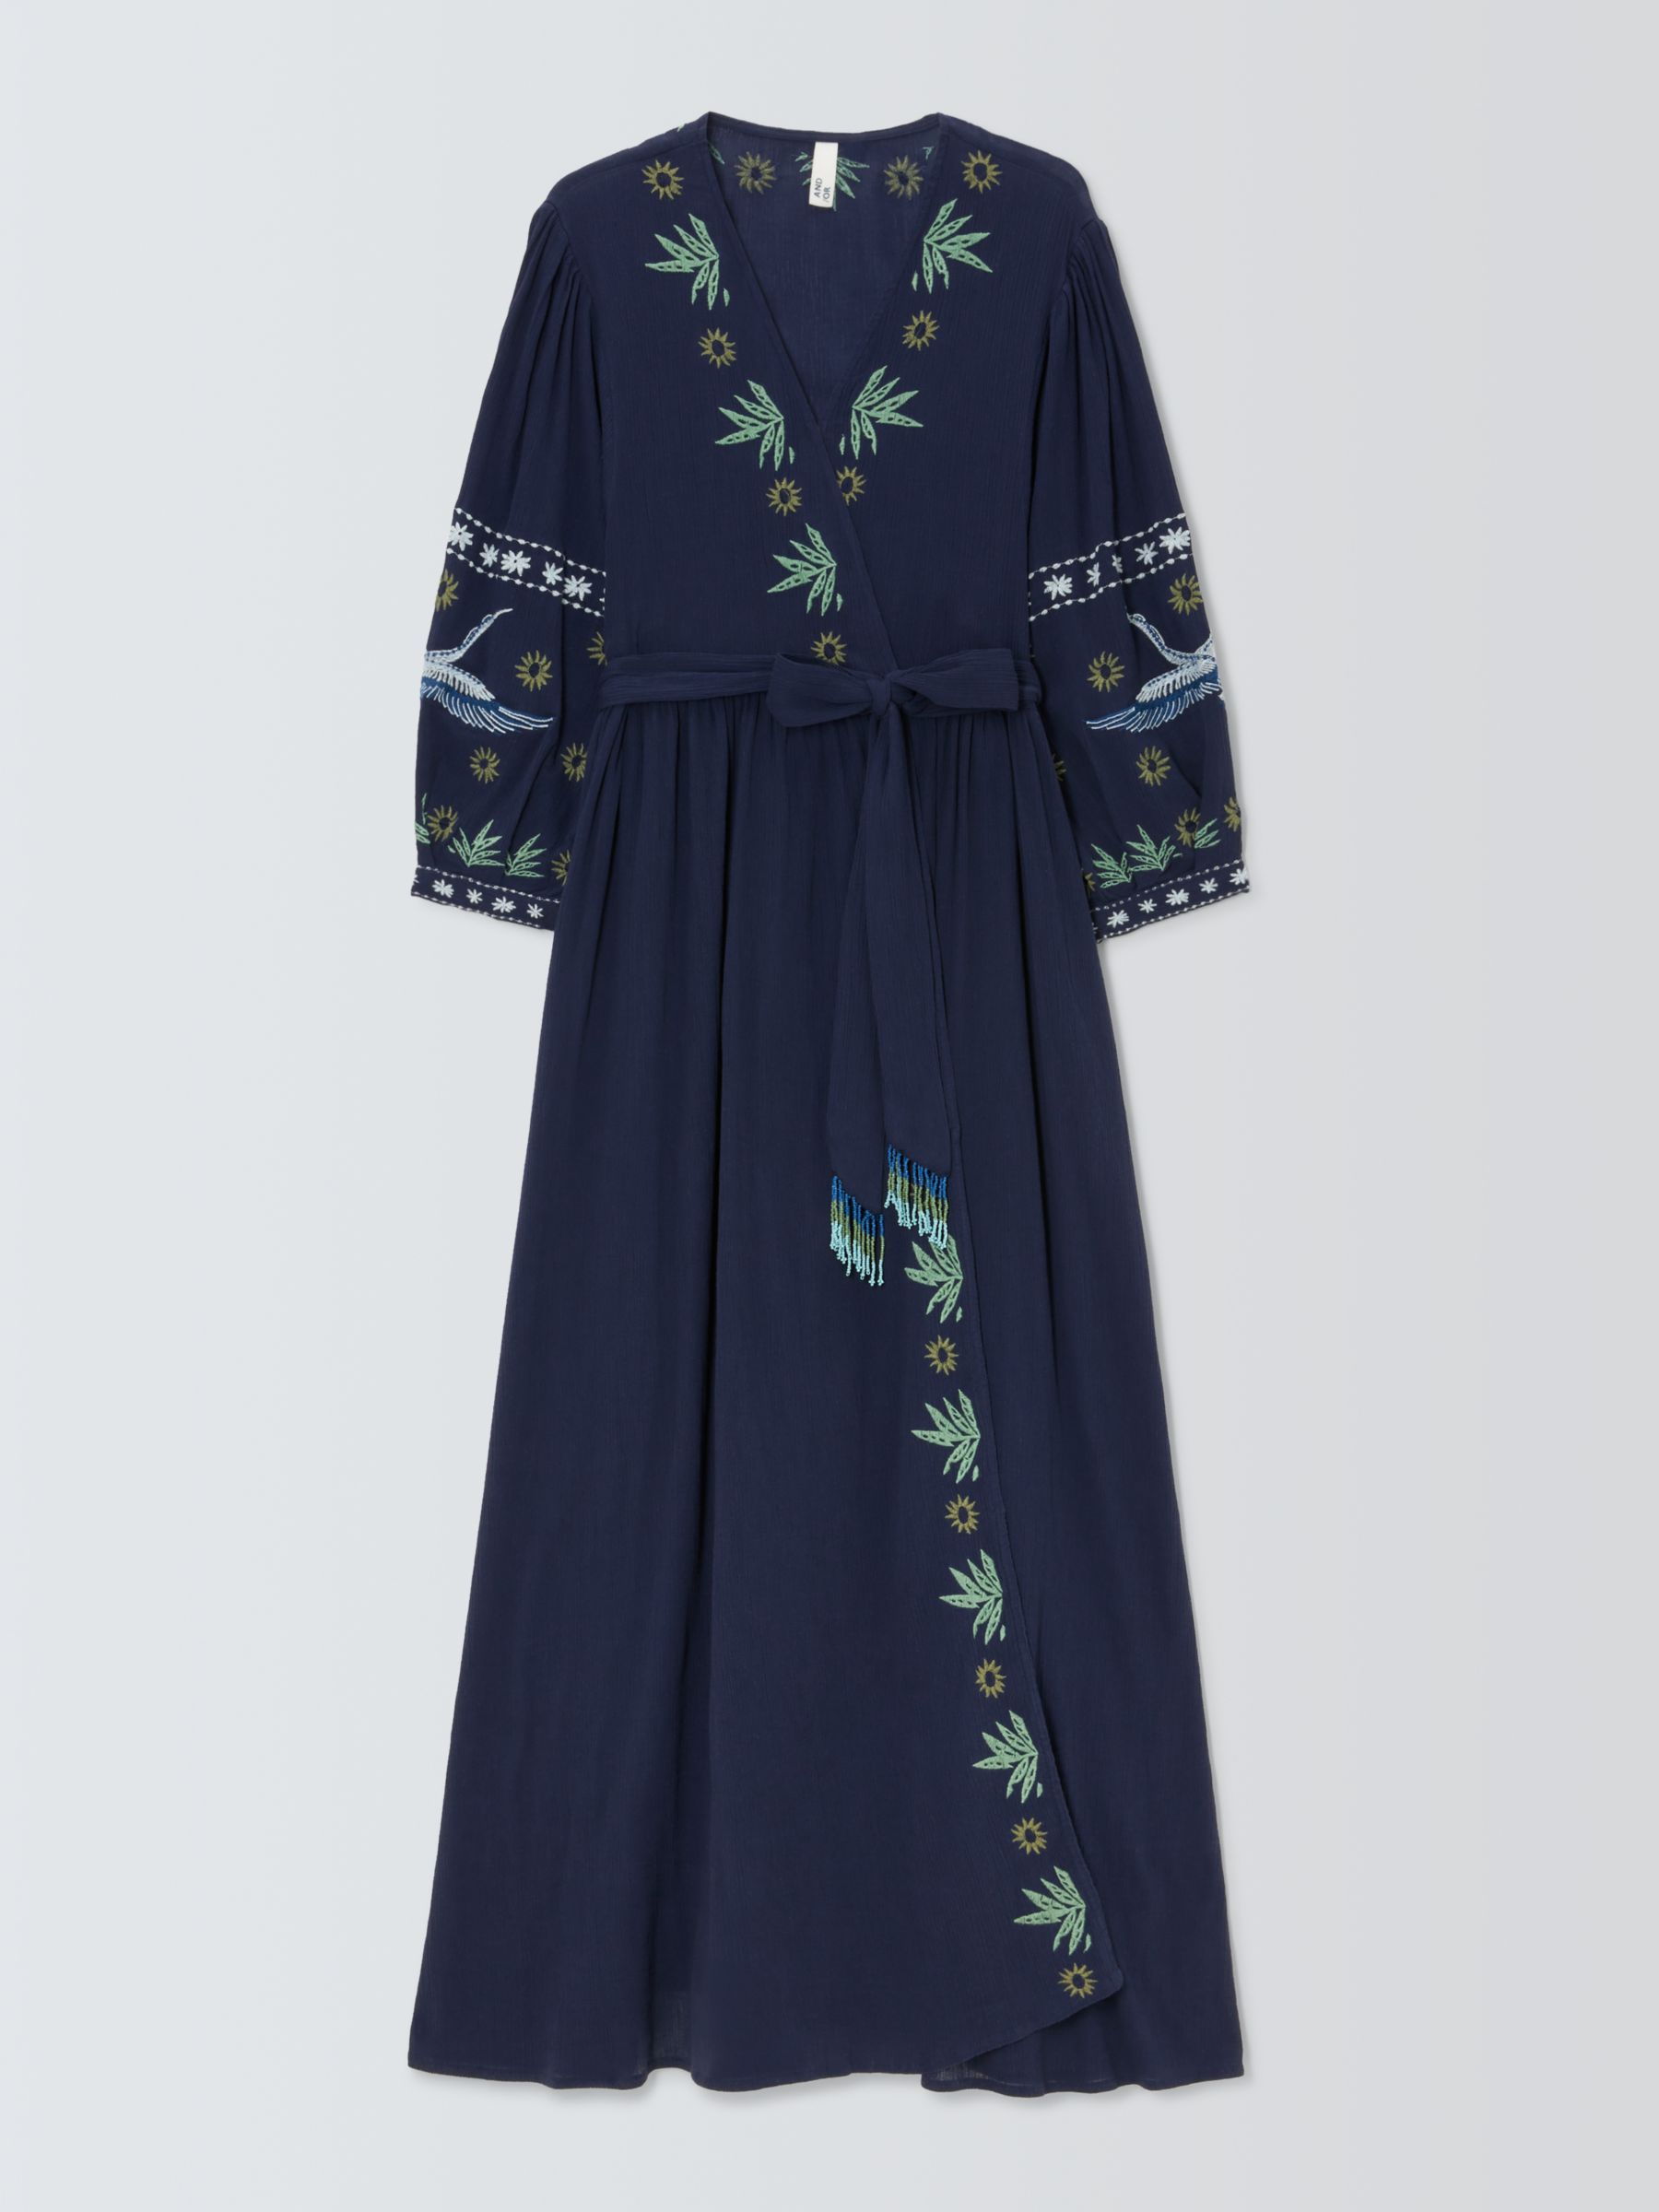 AND/OR Botanical Crane Beach Dress, Blue, S